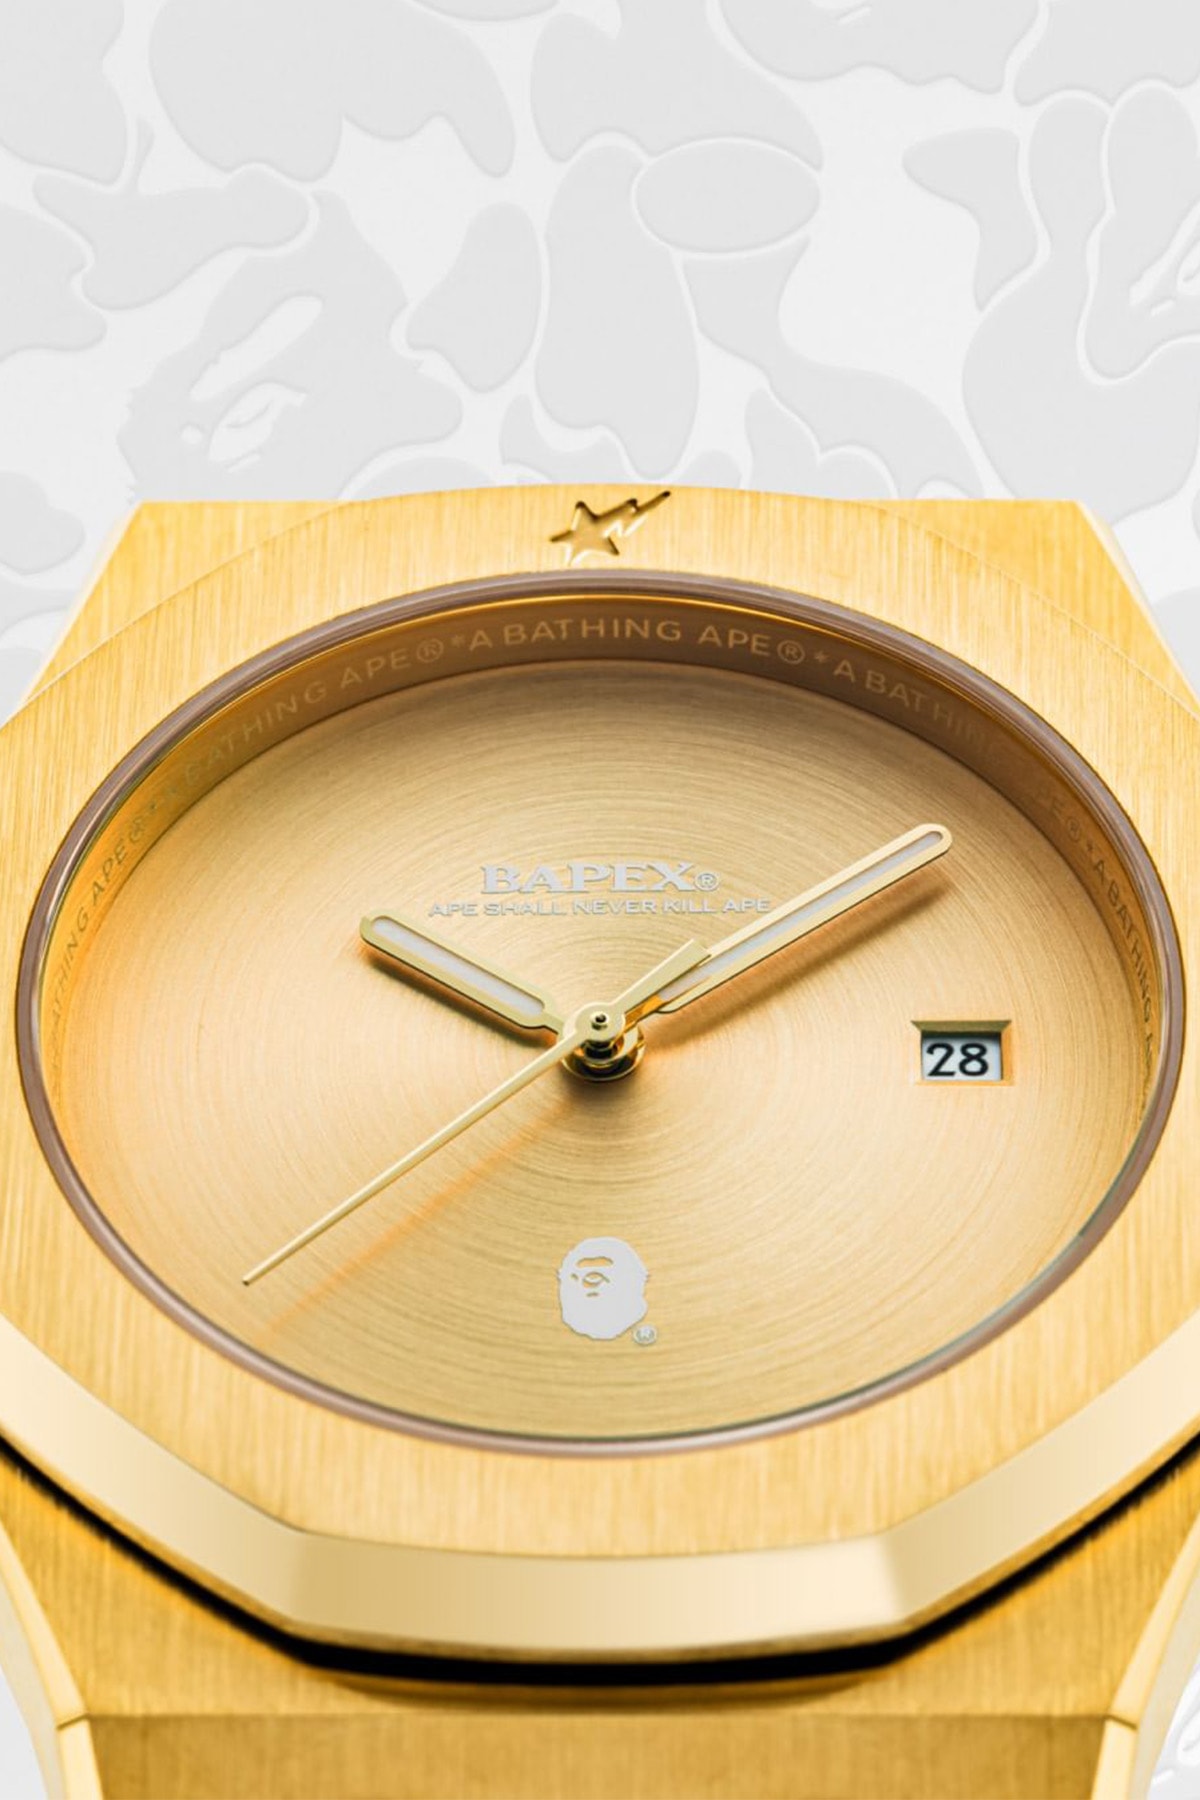 A BATHING APE®︎ 正式推出全新錶款型號 TYPE 9 BAPEX